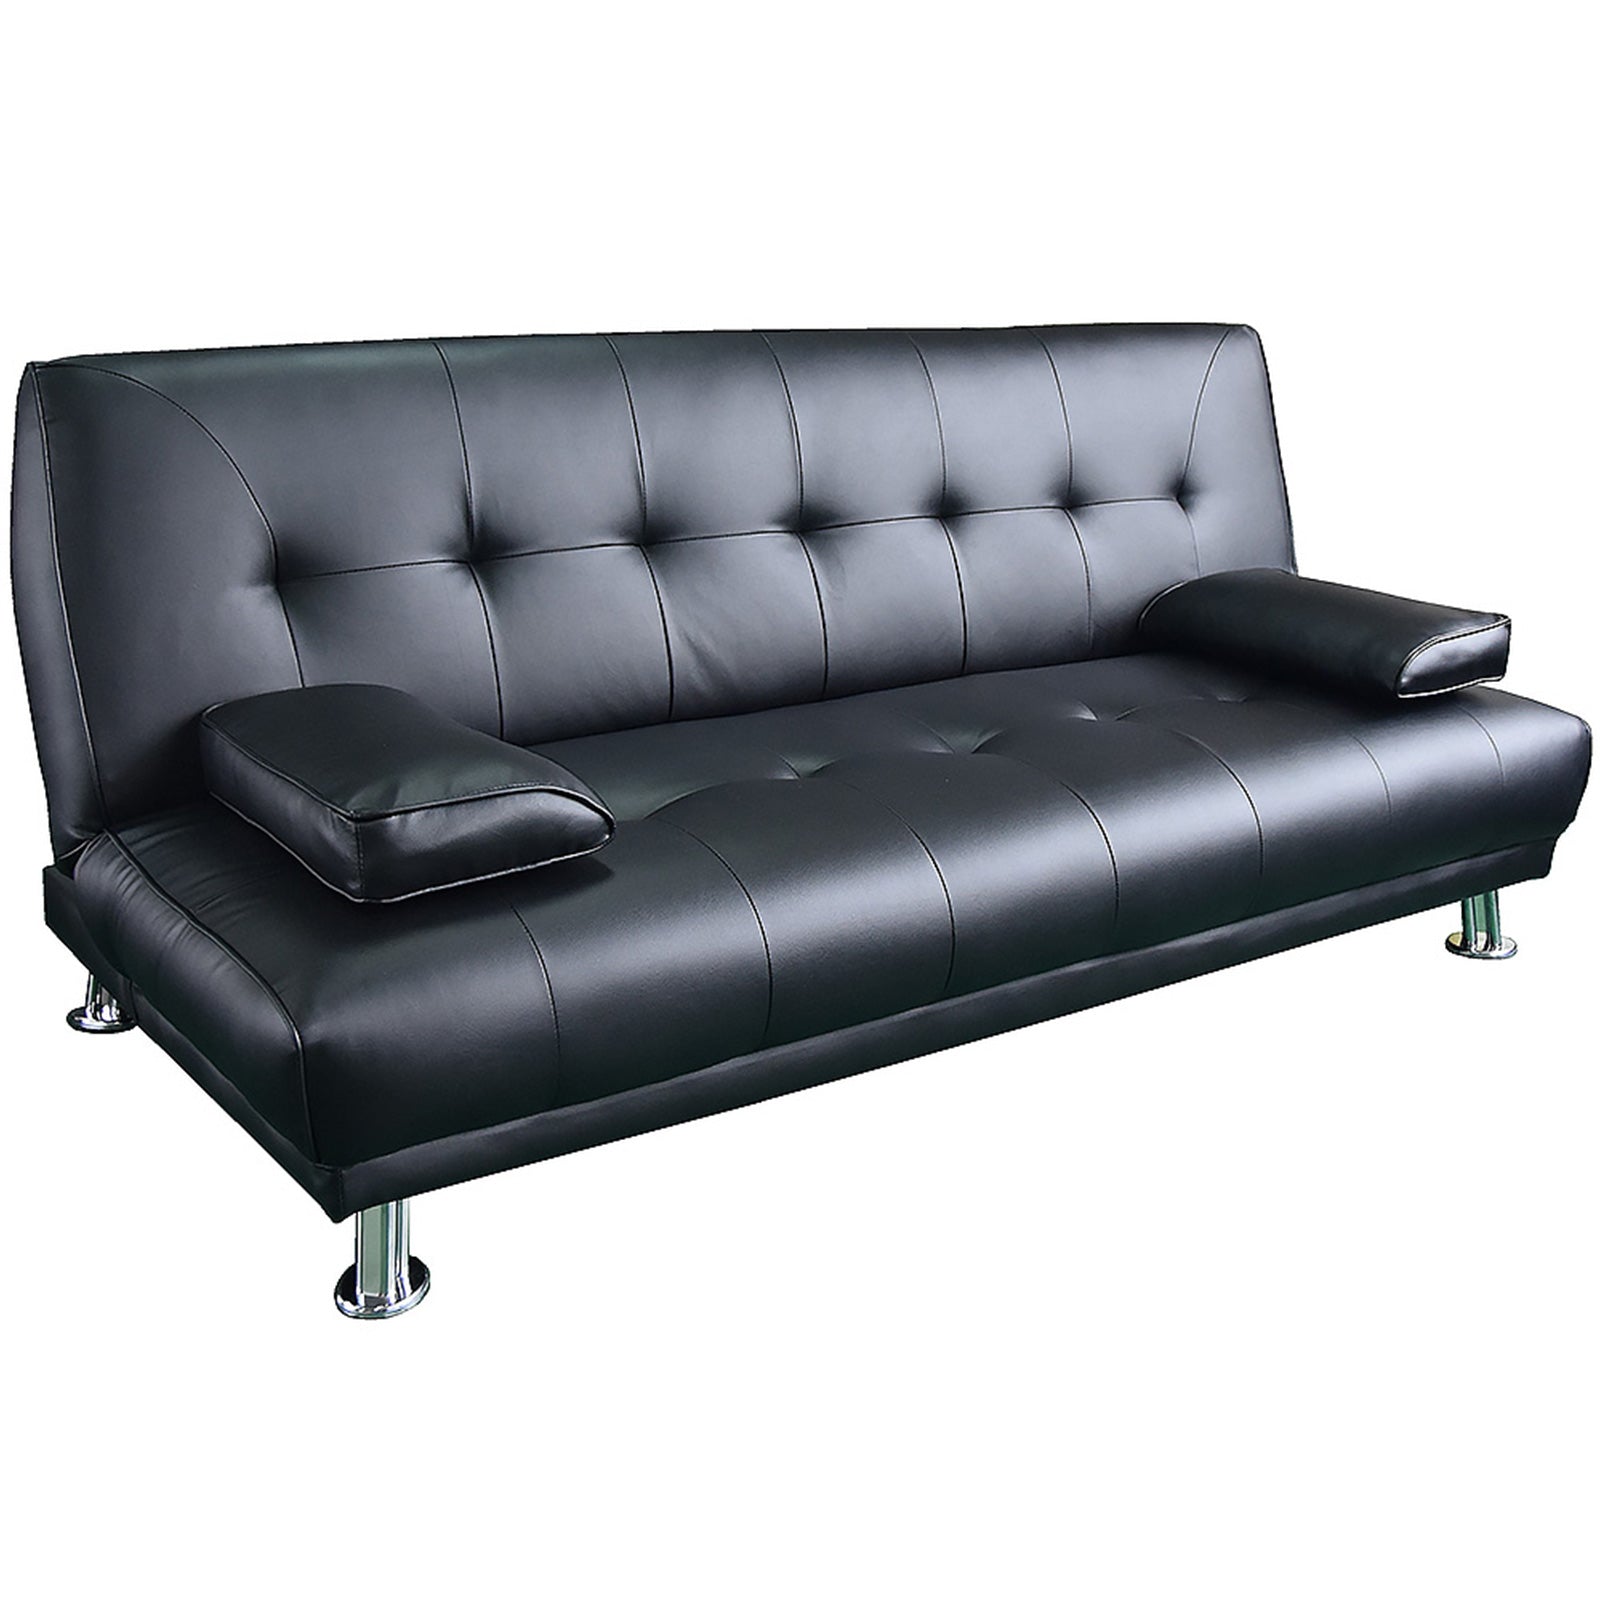 Sarantino Manhattan Sofa Bed Faux Leather Lounge Couch Futon Furniture Suite - Black - 0